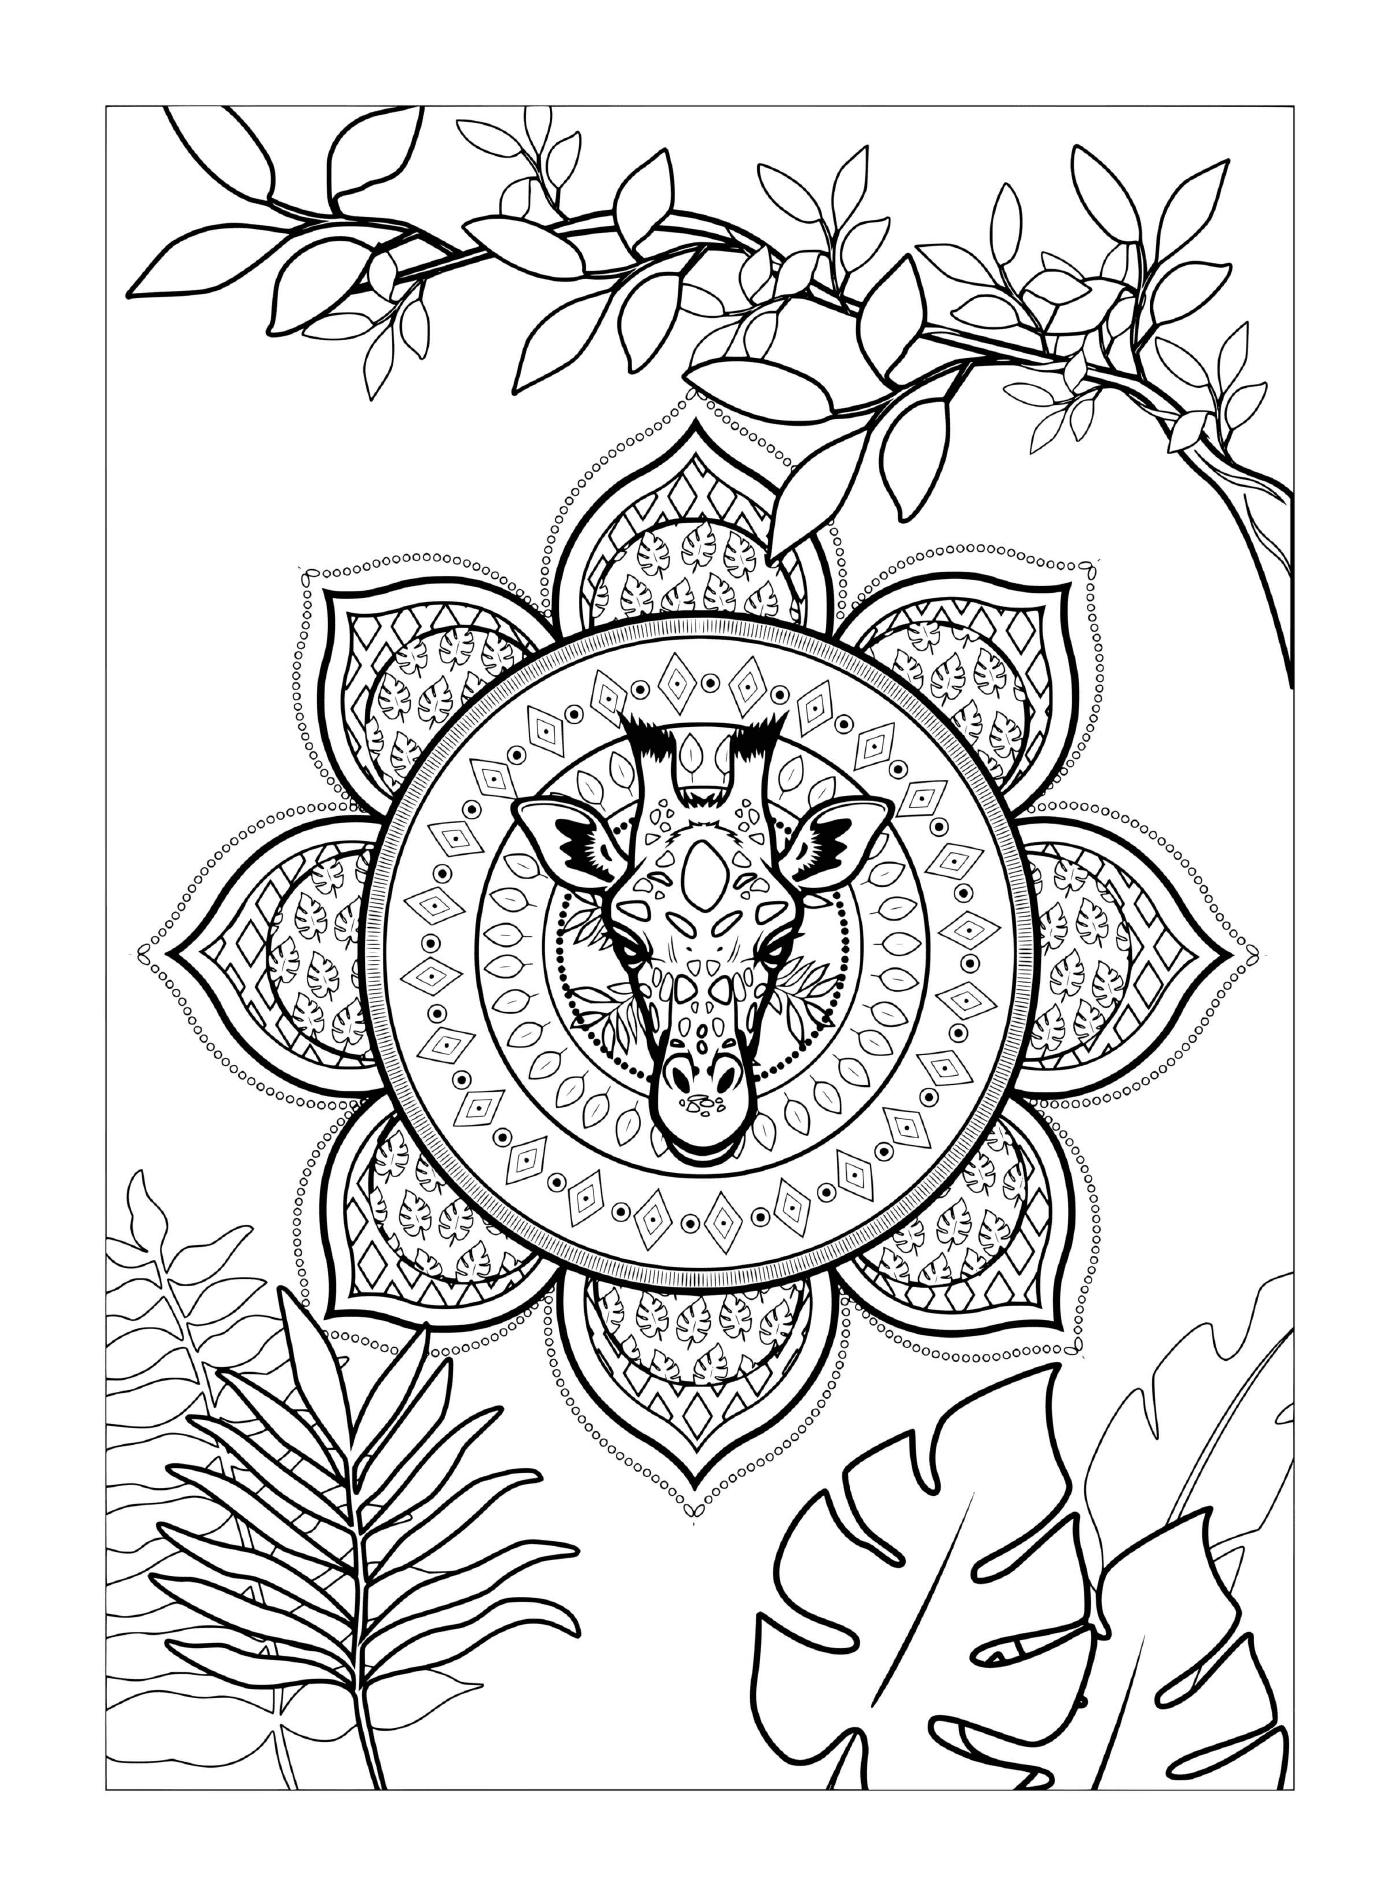  Una jirafa zen en un mandala de hojas 